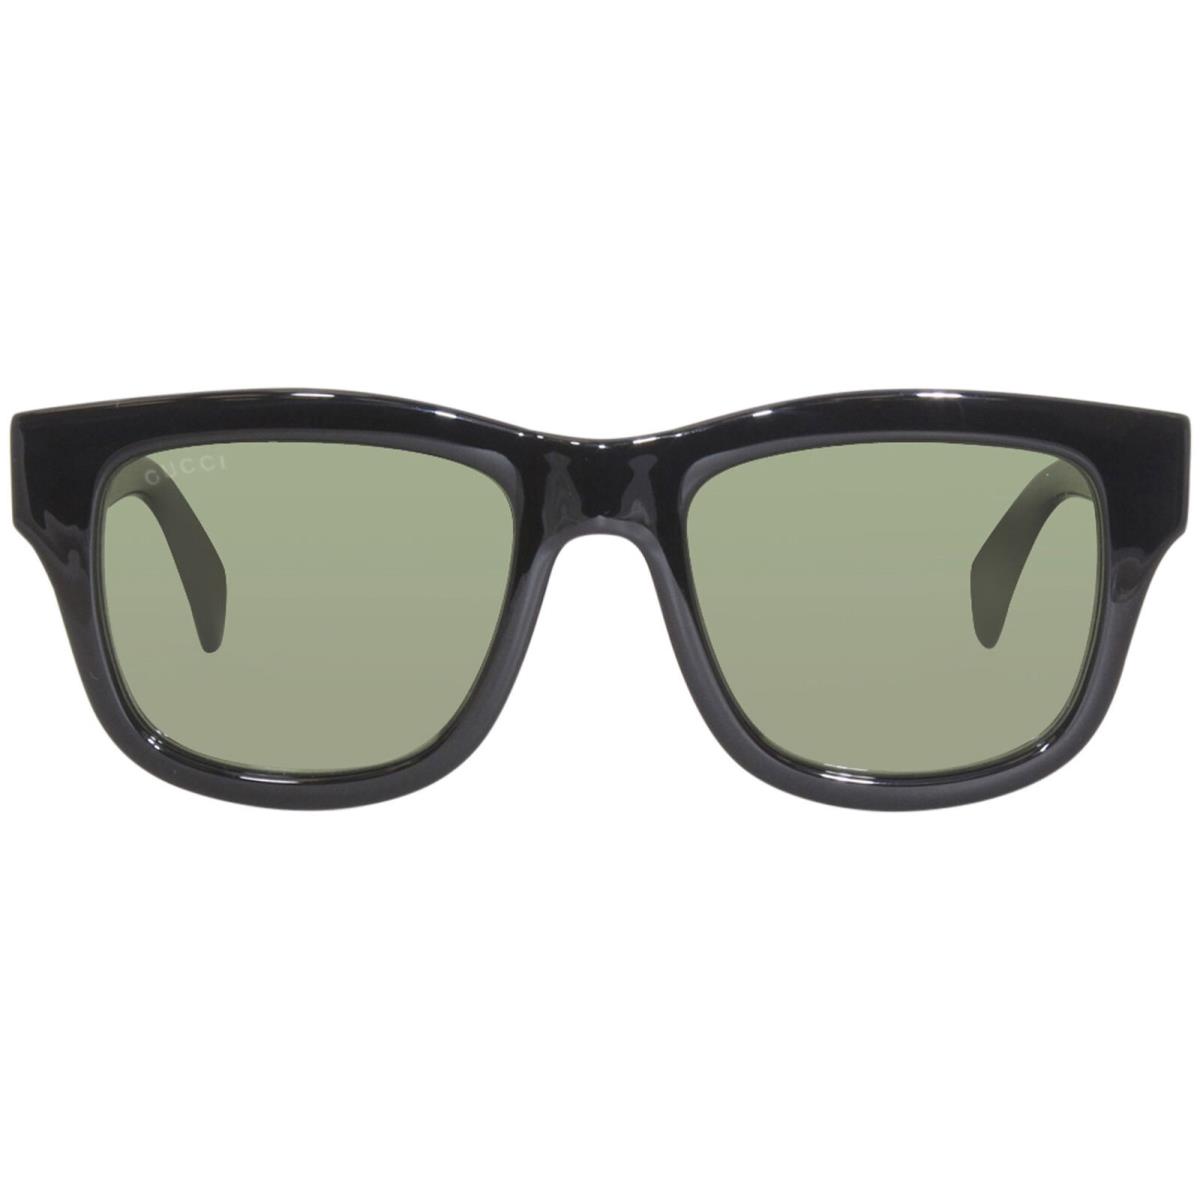 Gucci GG1135S 001 Sunglasses Men`s Black/polarized Green Lens Square Shape 51mm